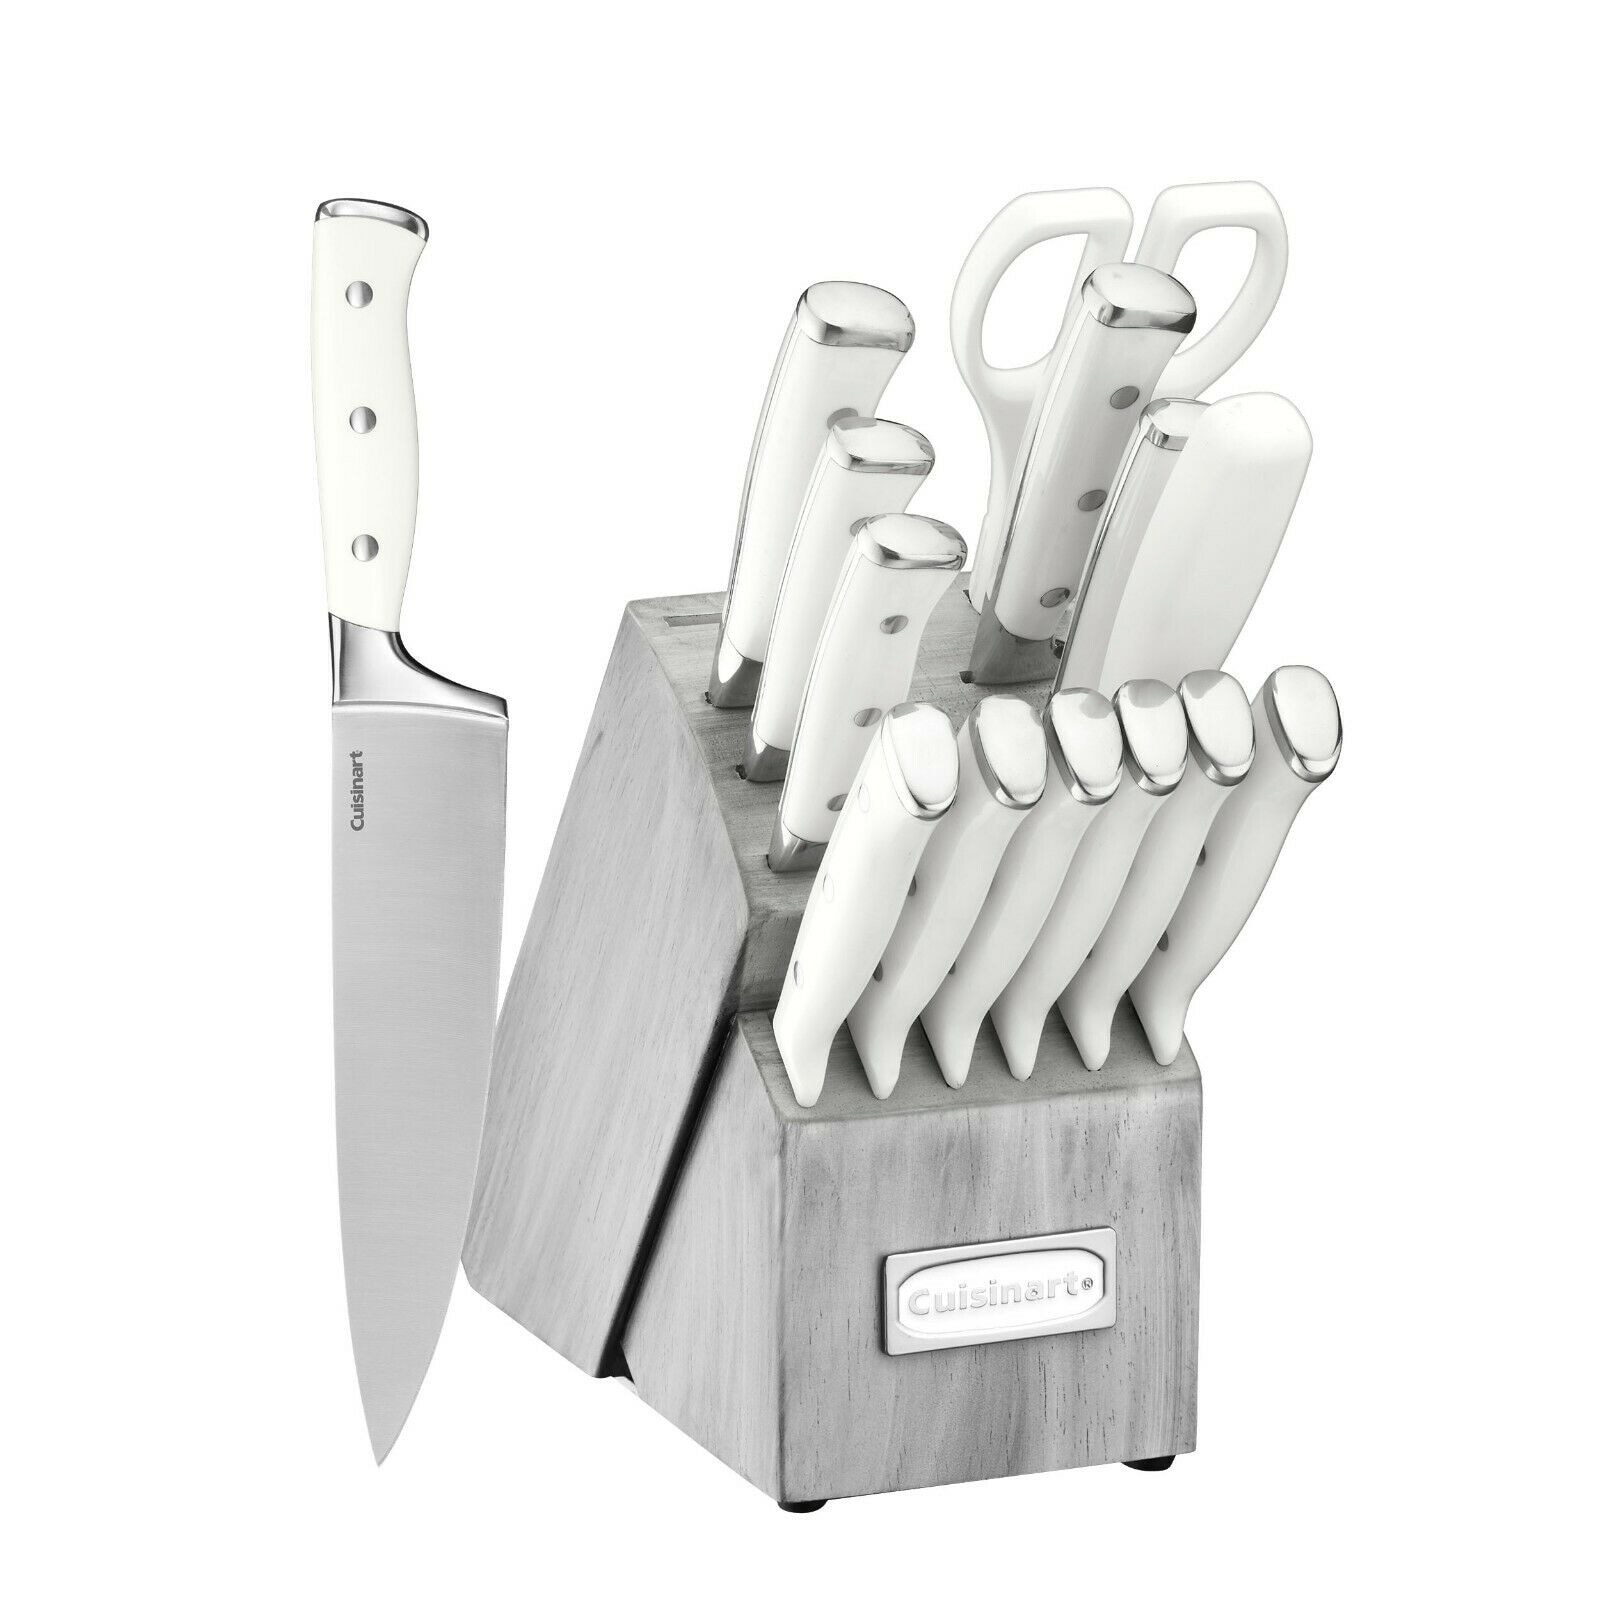 Cuisinart 15-Piece German Stainless Steel Hollow Handle Knife